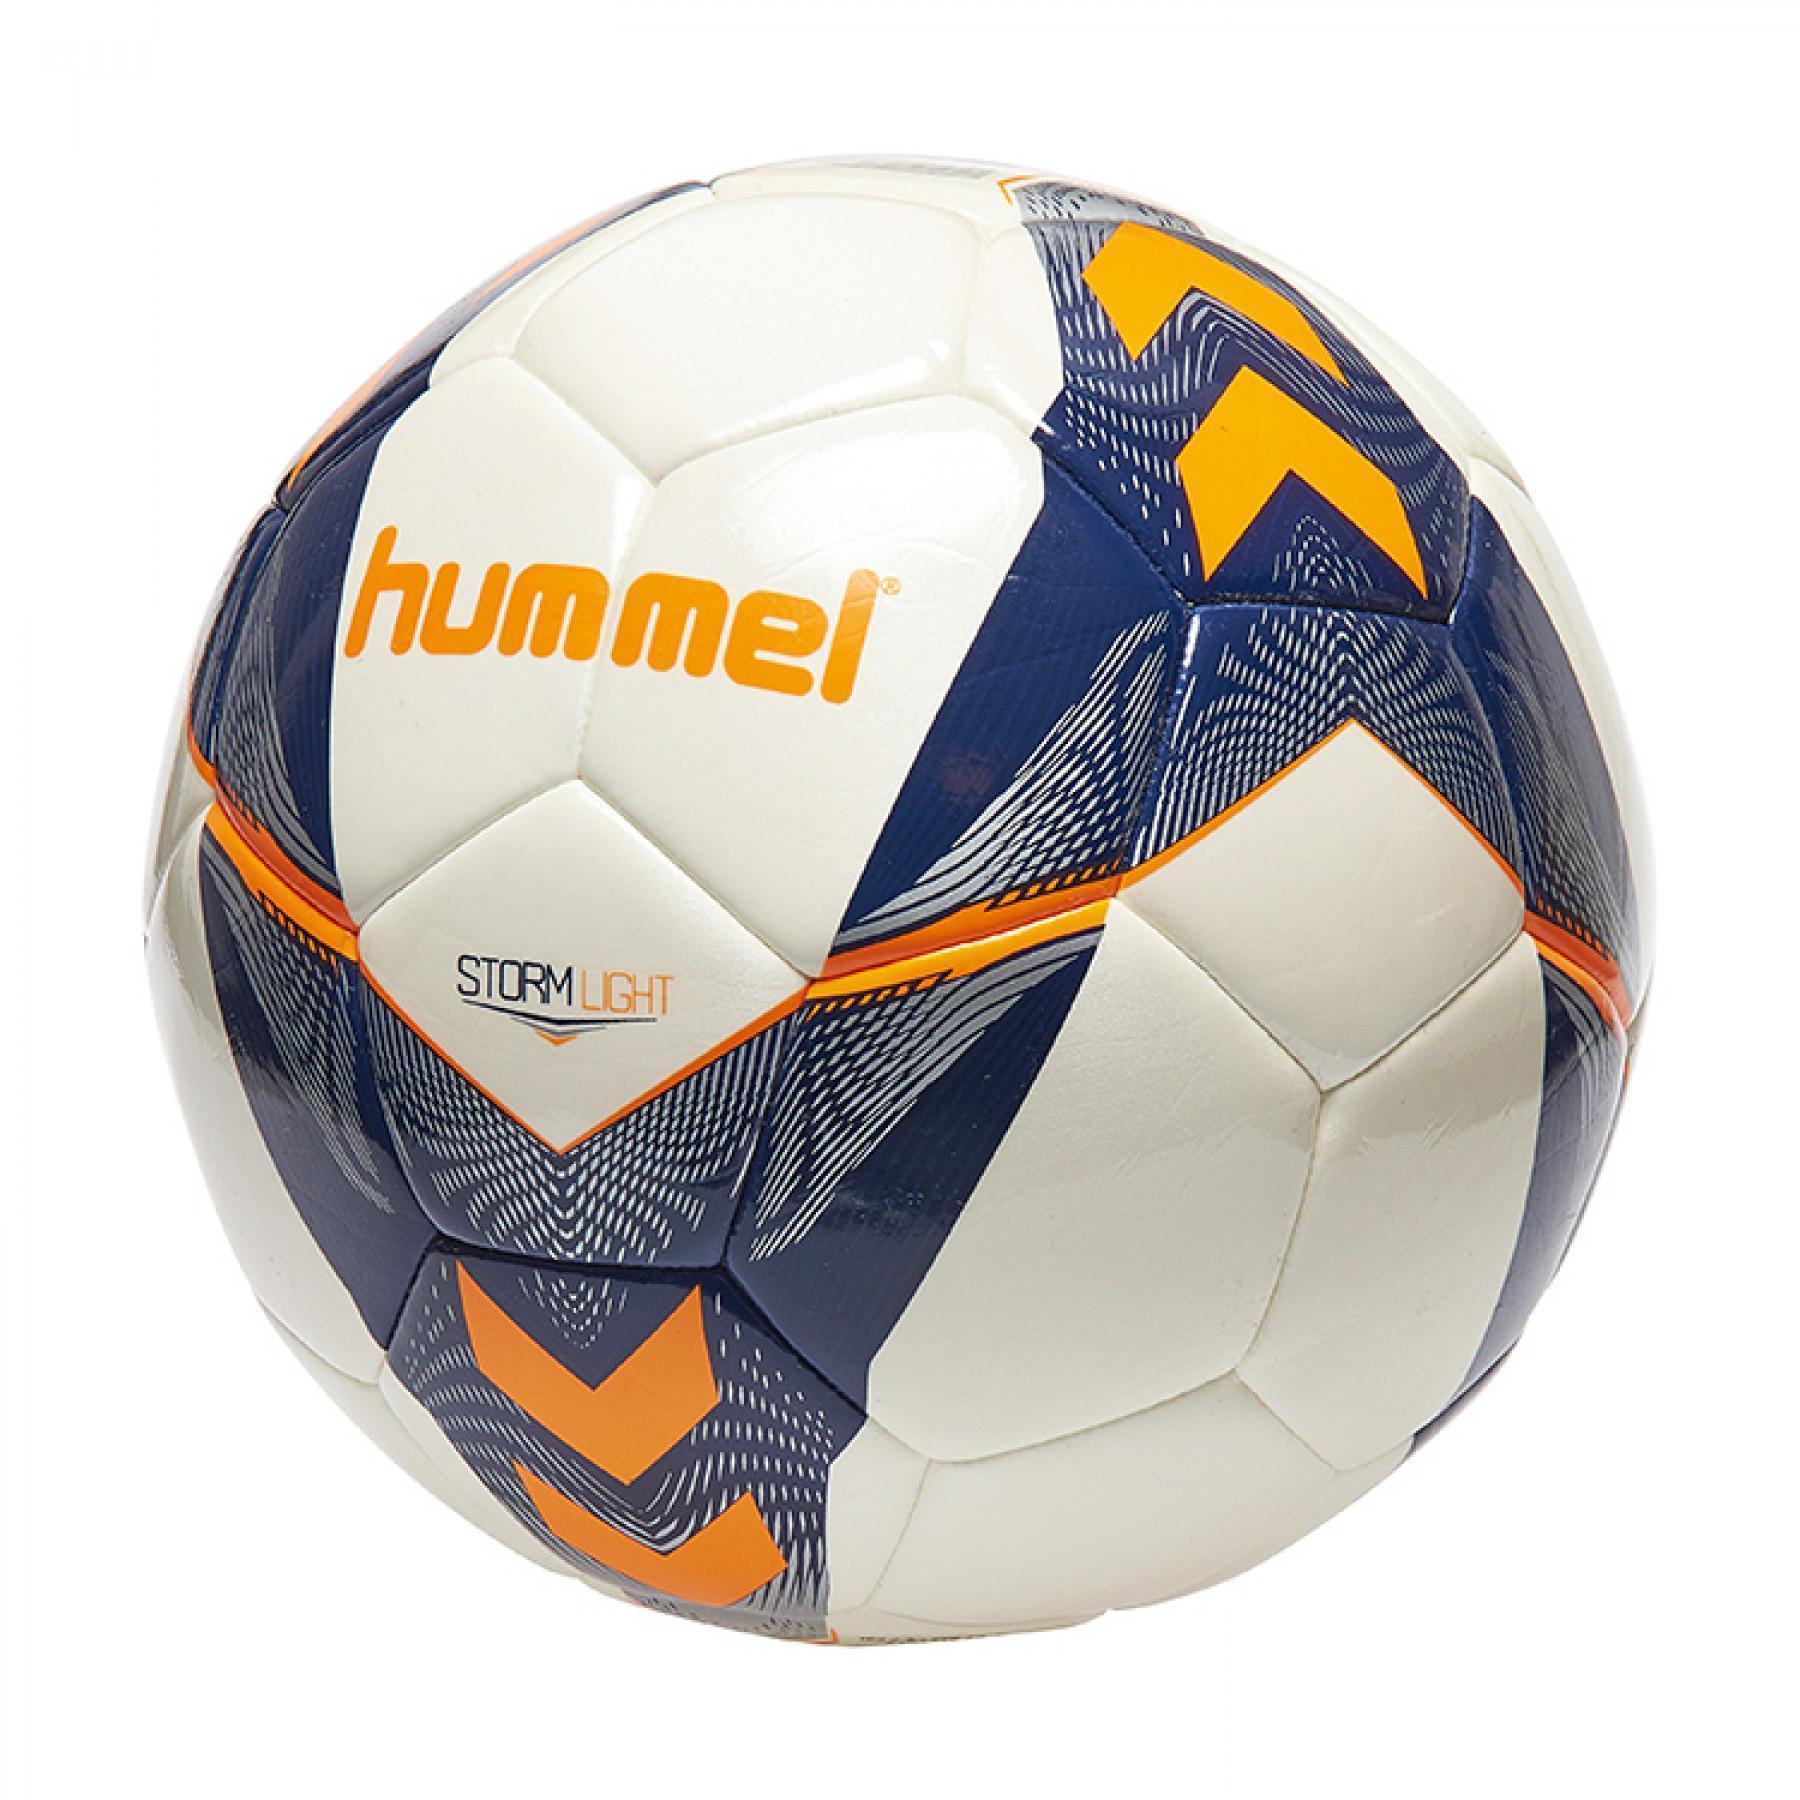 Fotboll Hummel storm light